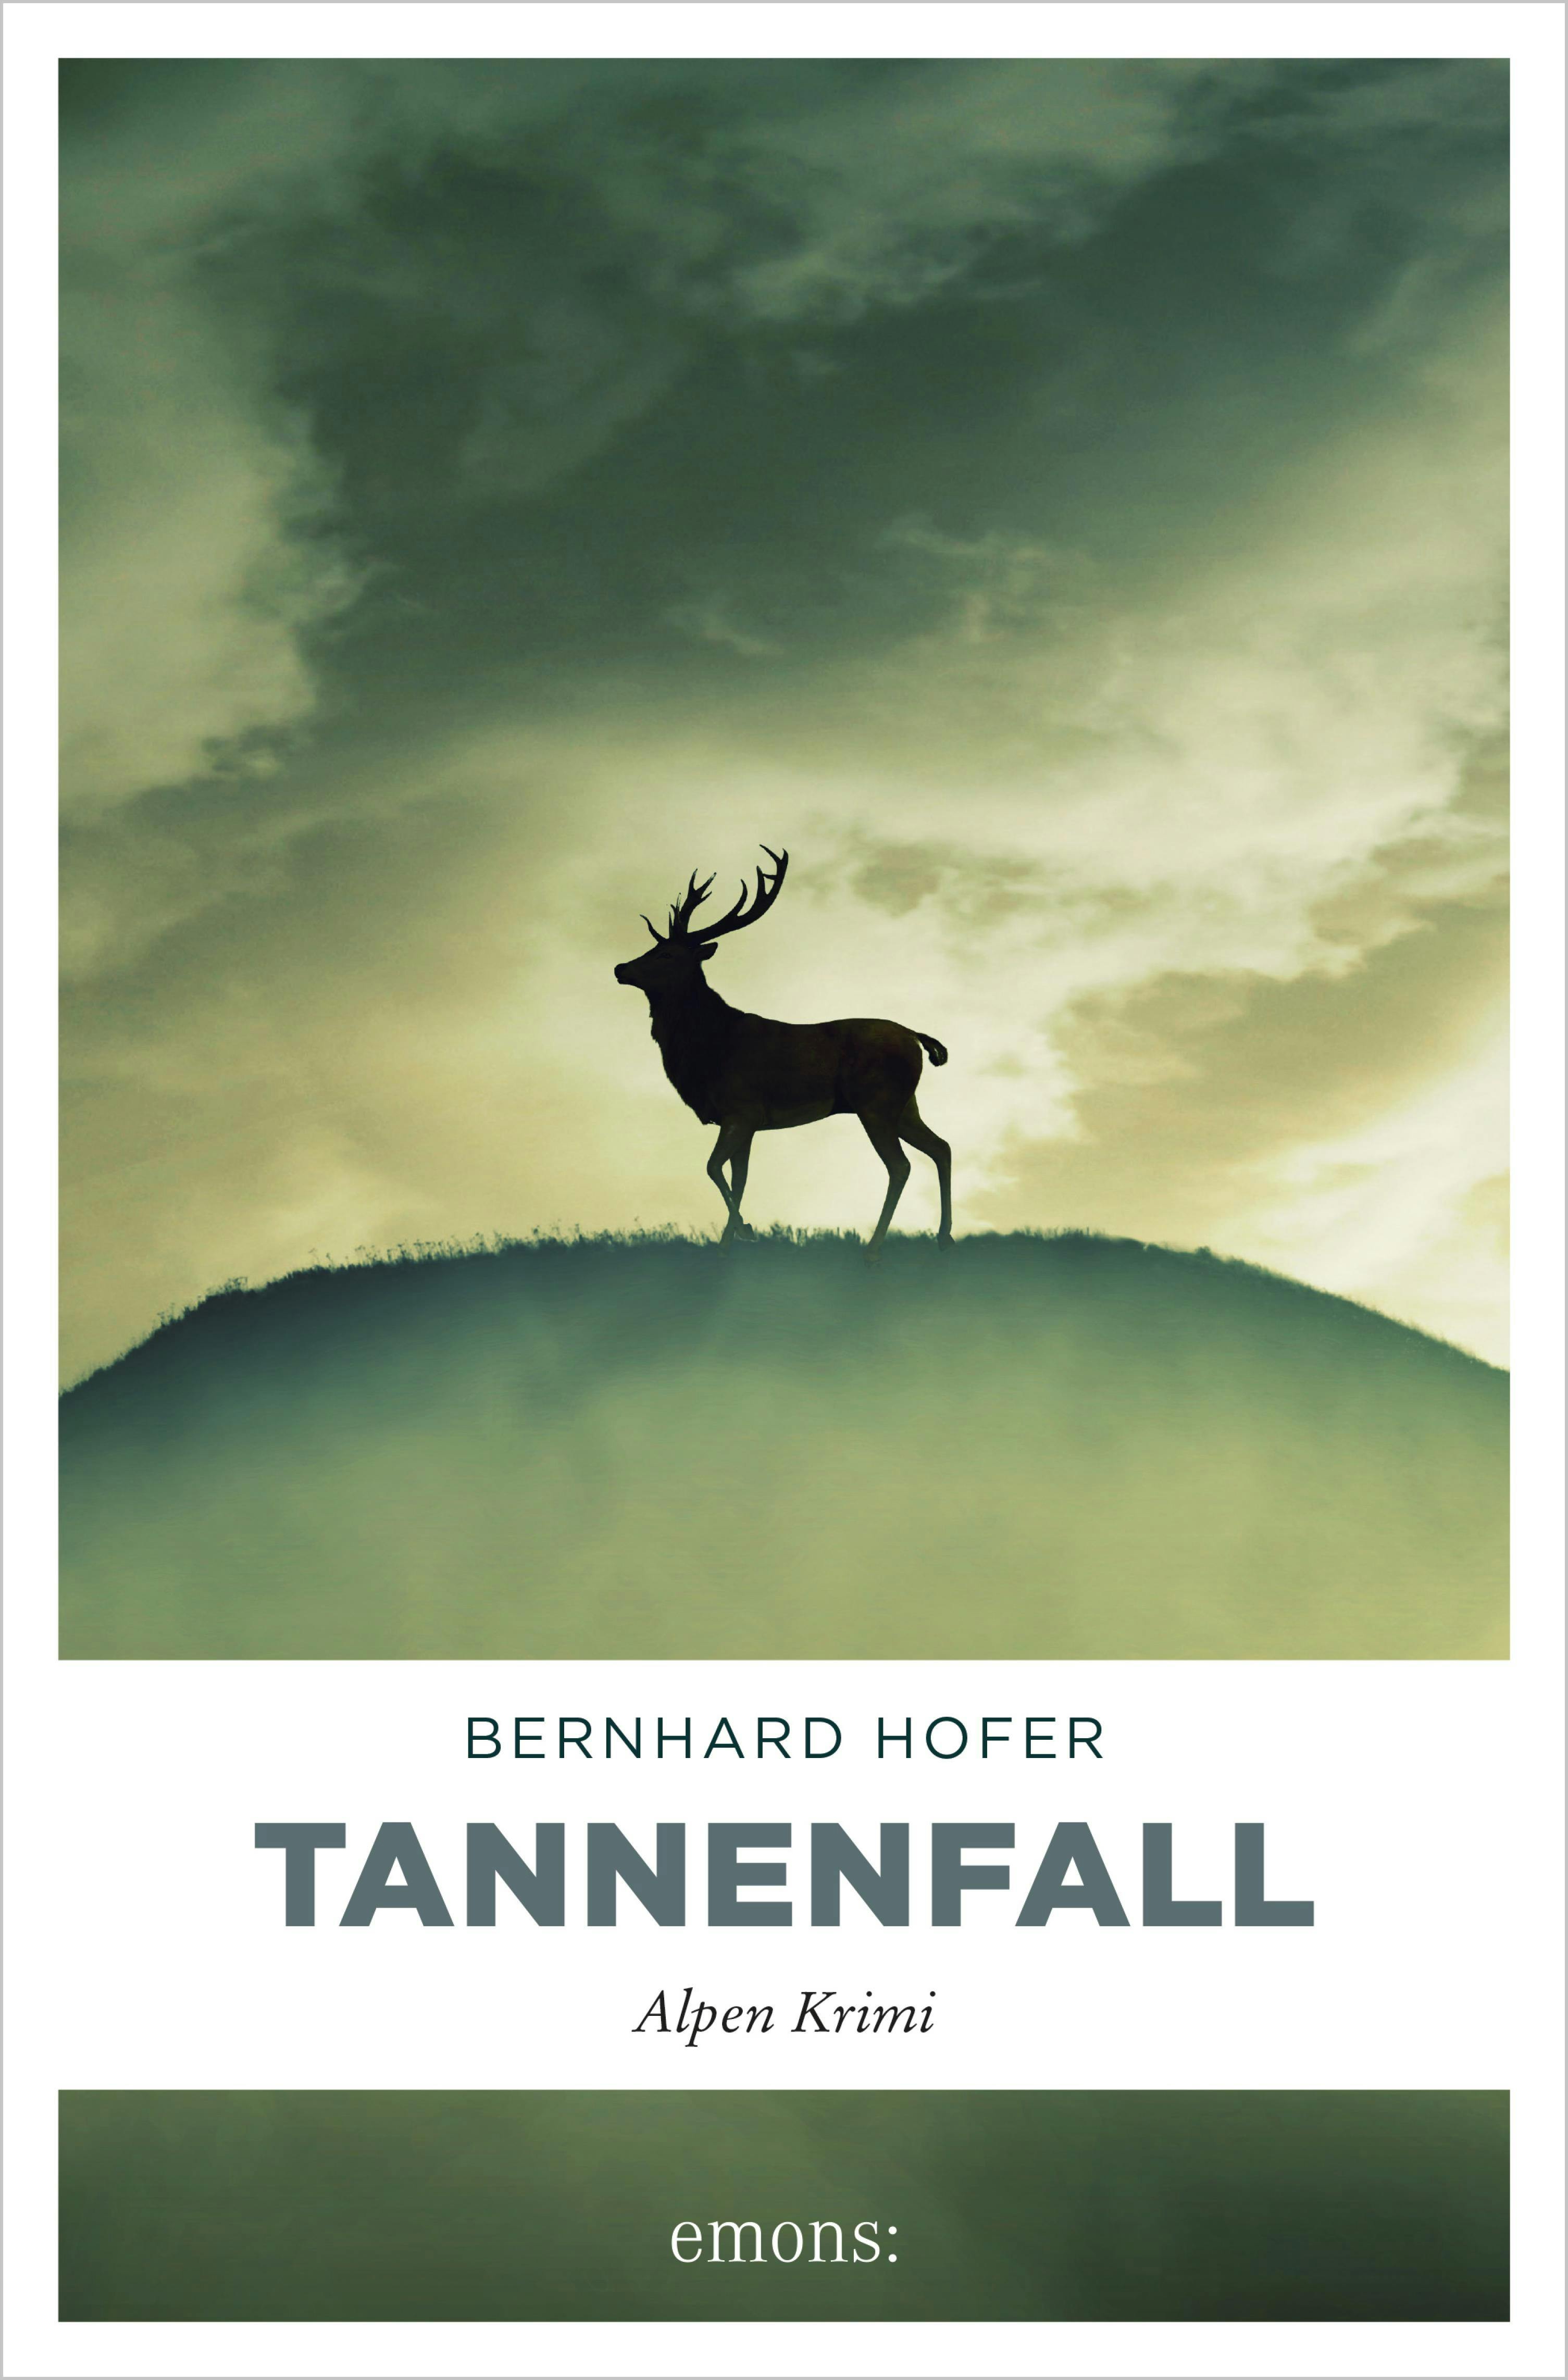 Tannenfall: Alpen Krimi - Bernhard Hofer